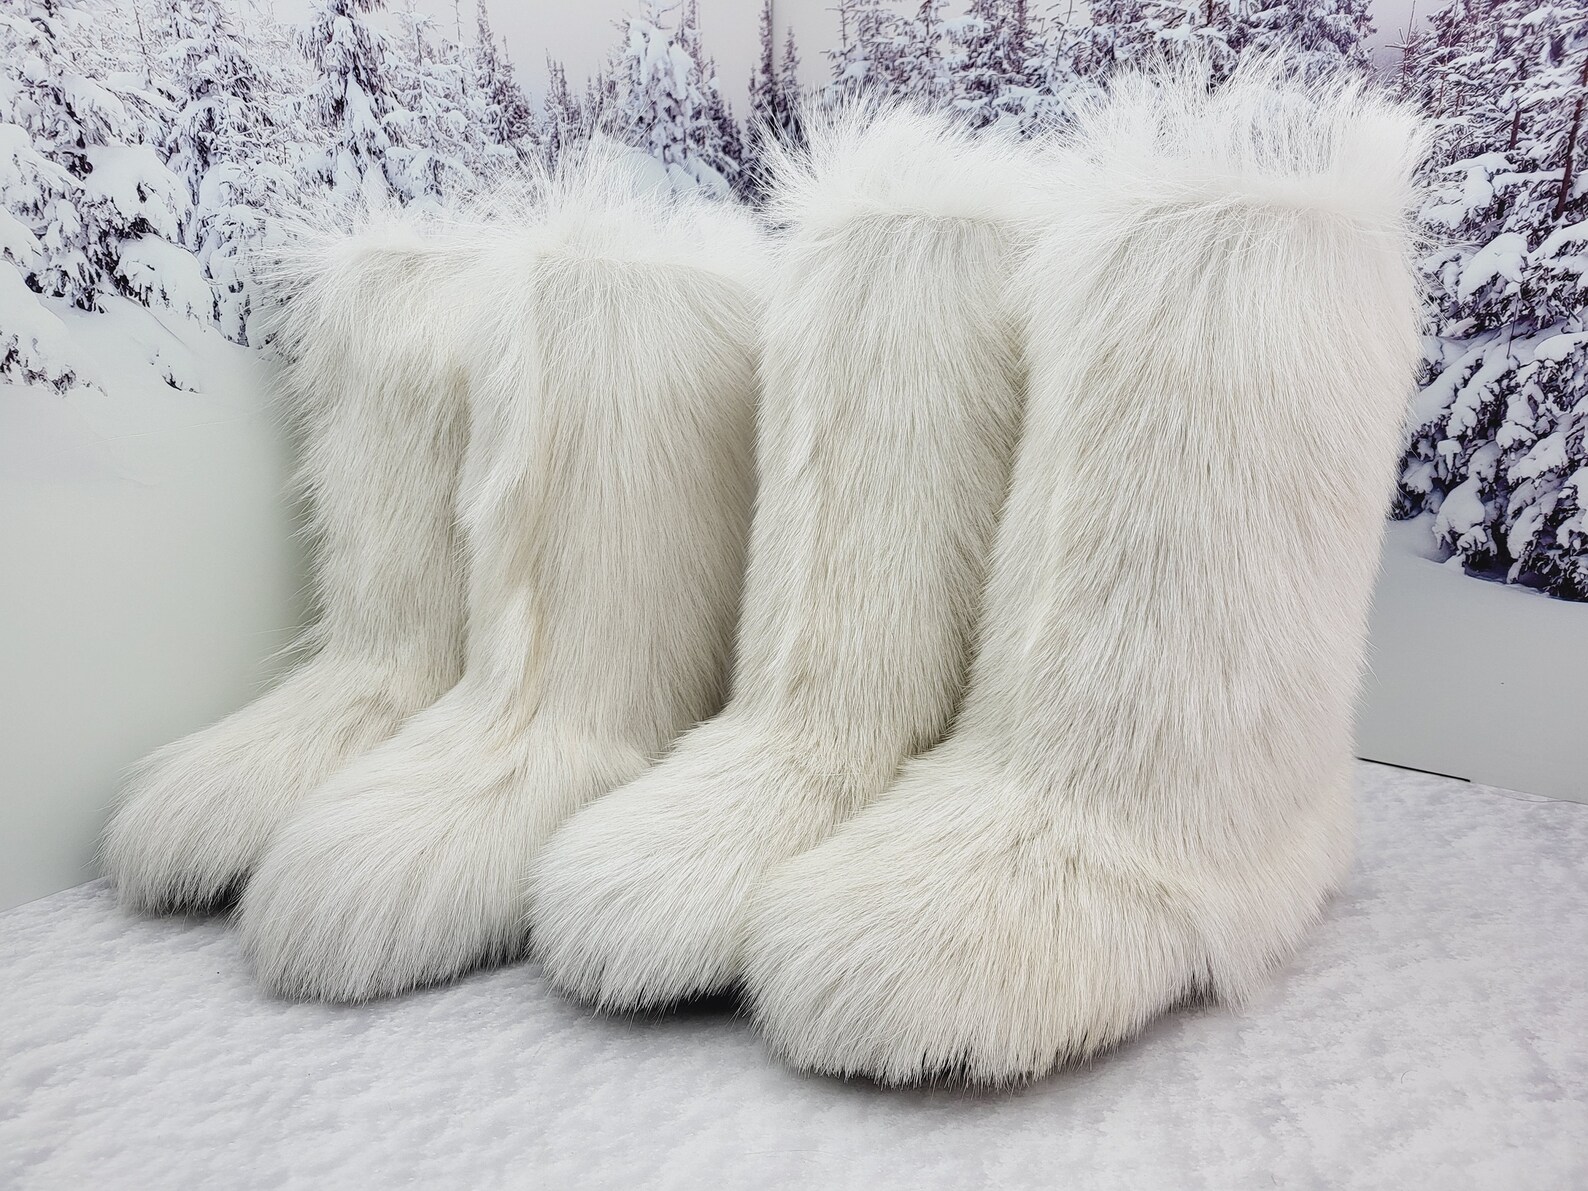 White Goat Fur Knee Yeti Fur Boots Winter High Fur Boots - Etsy